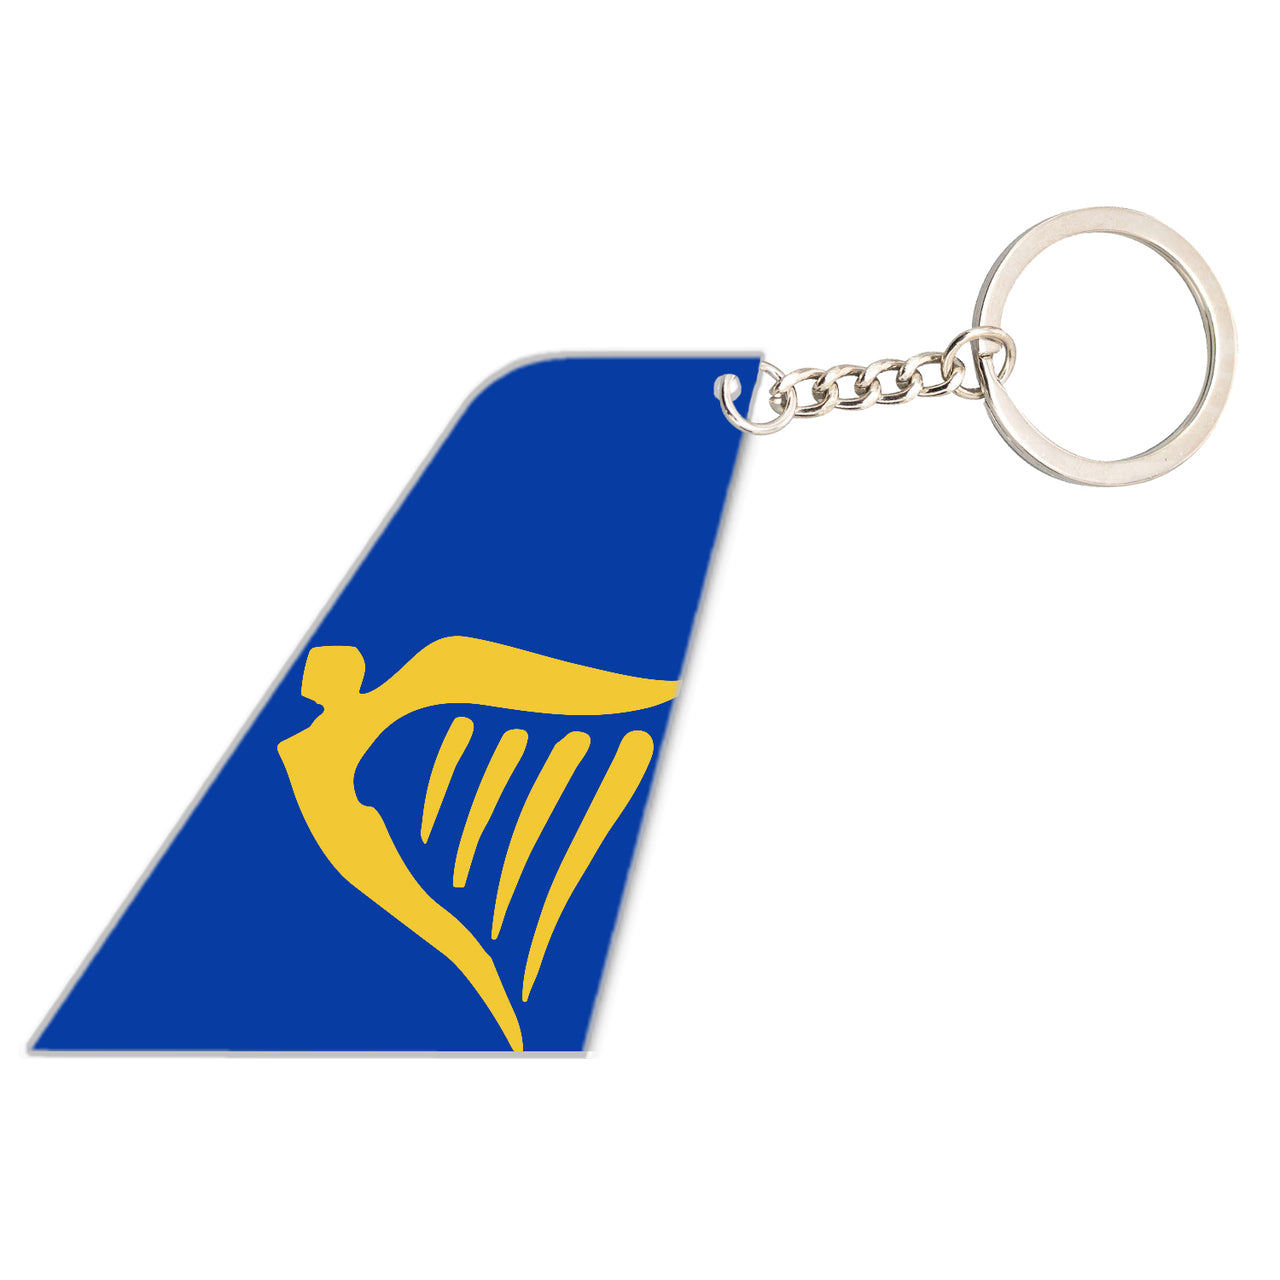 Ryanair Designed Tail Key Chains